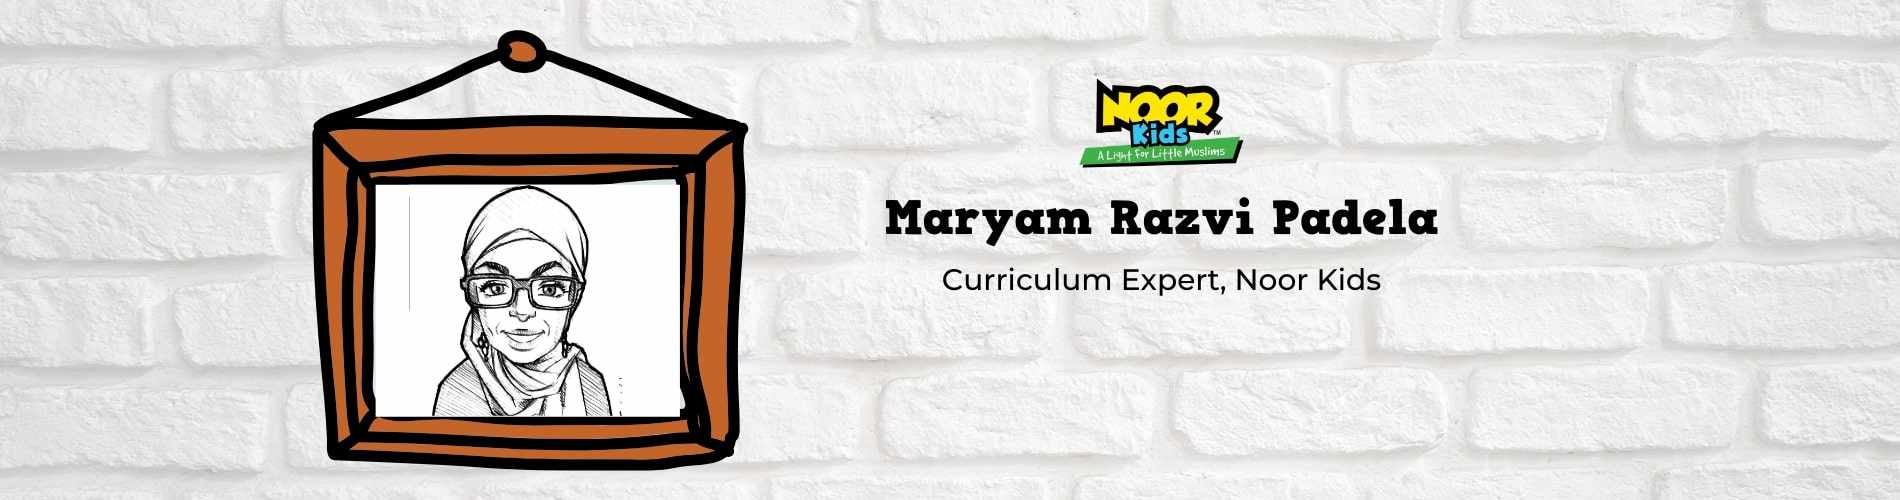 Maryam Razvi Padela, Curriculum Expert at Noor Kids